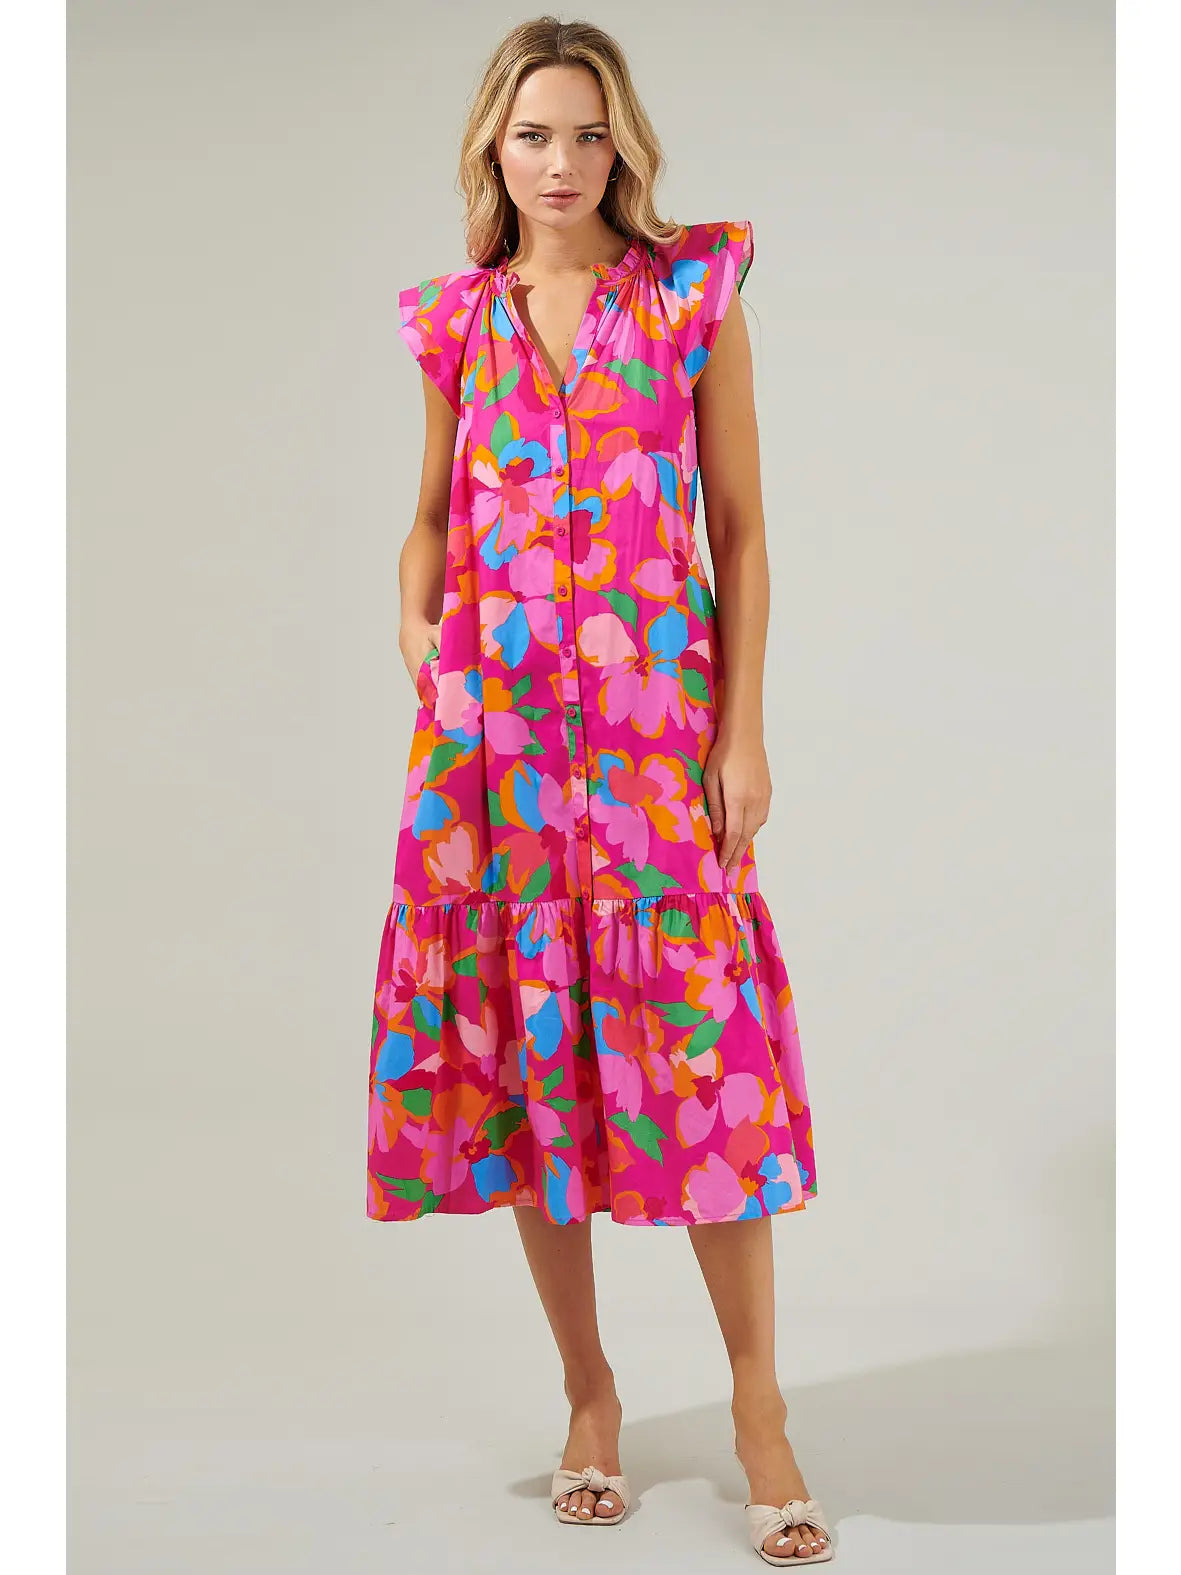 Cami Summer Floral Dress